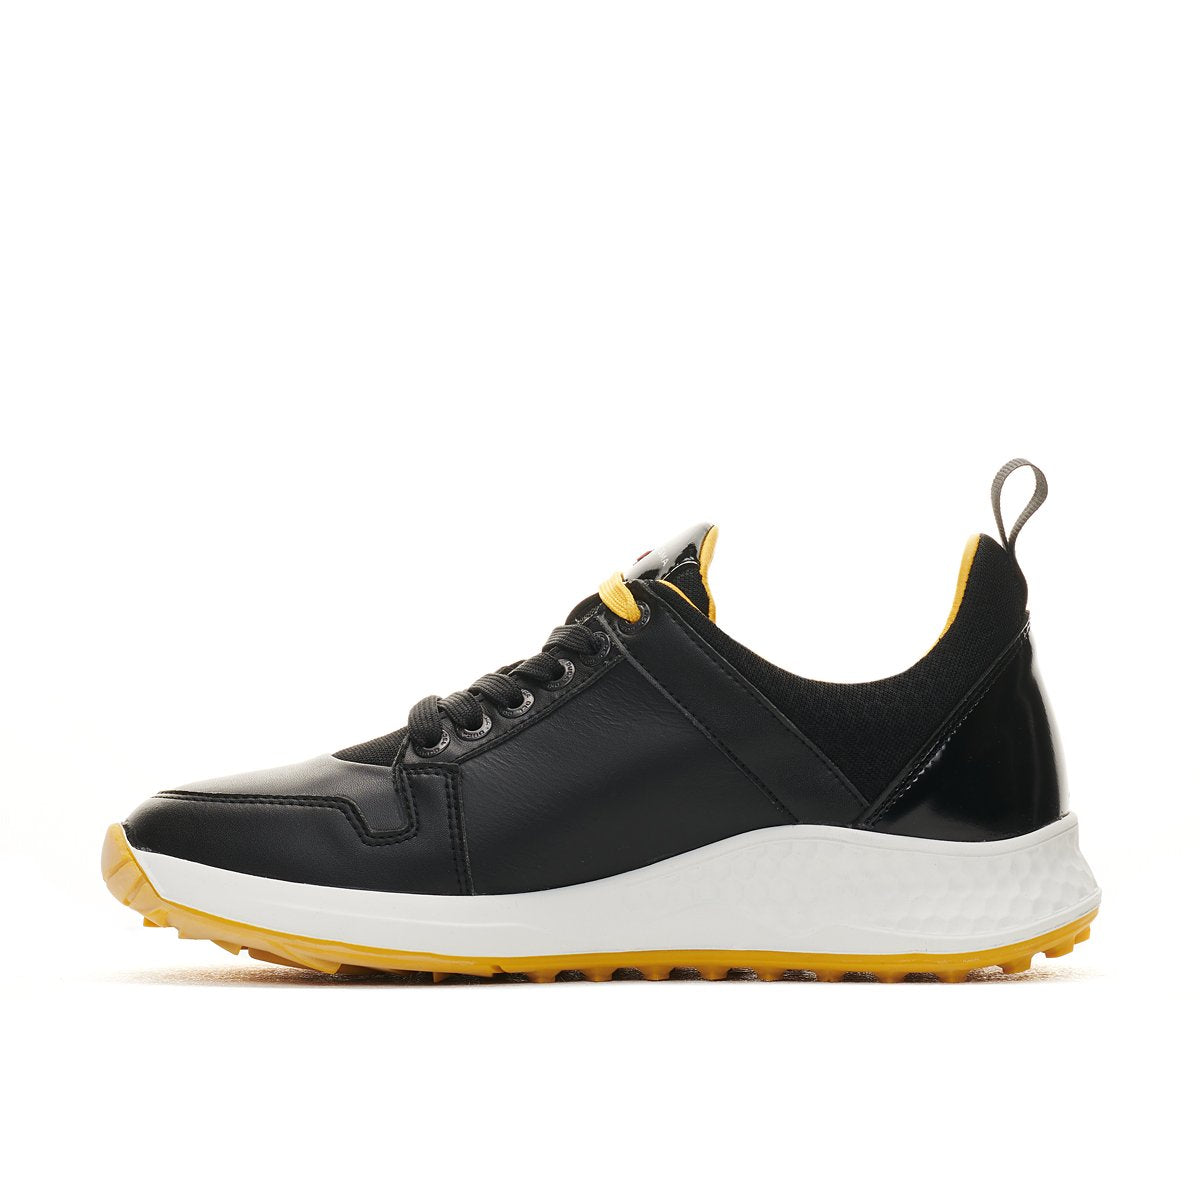 Siren Black/Yellow - Women's Golf Shoe